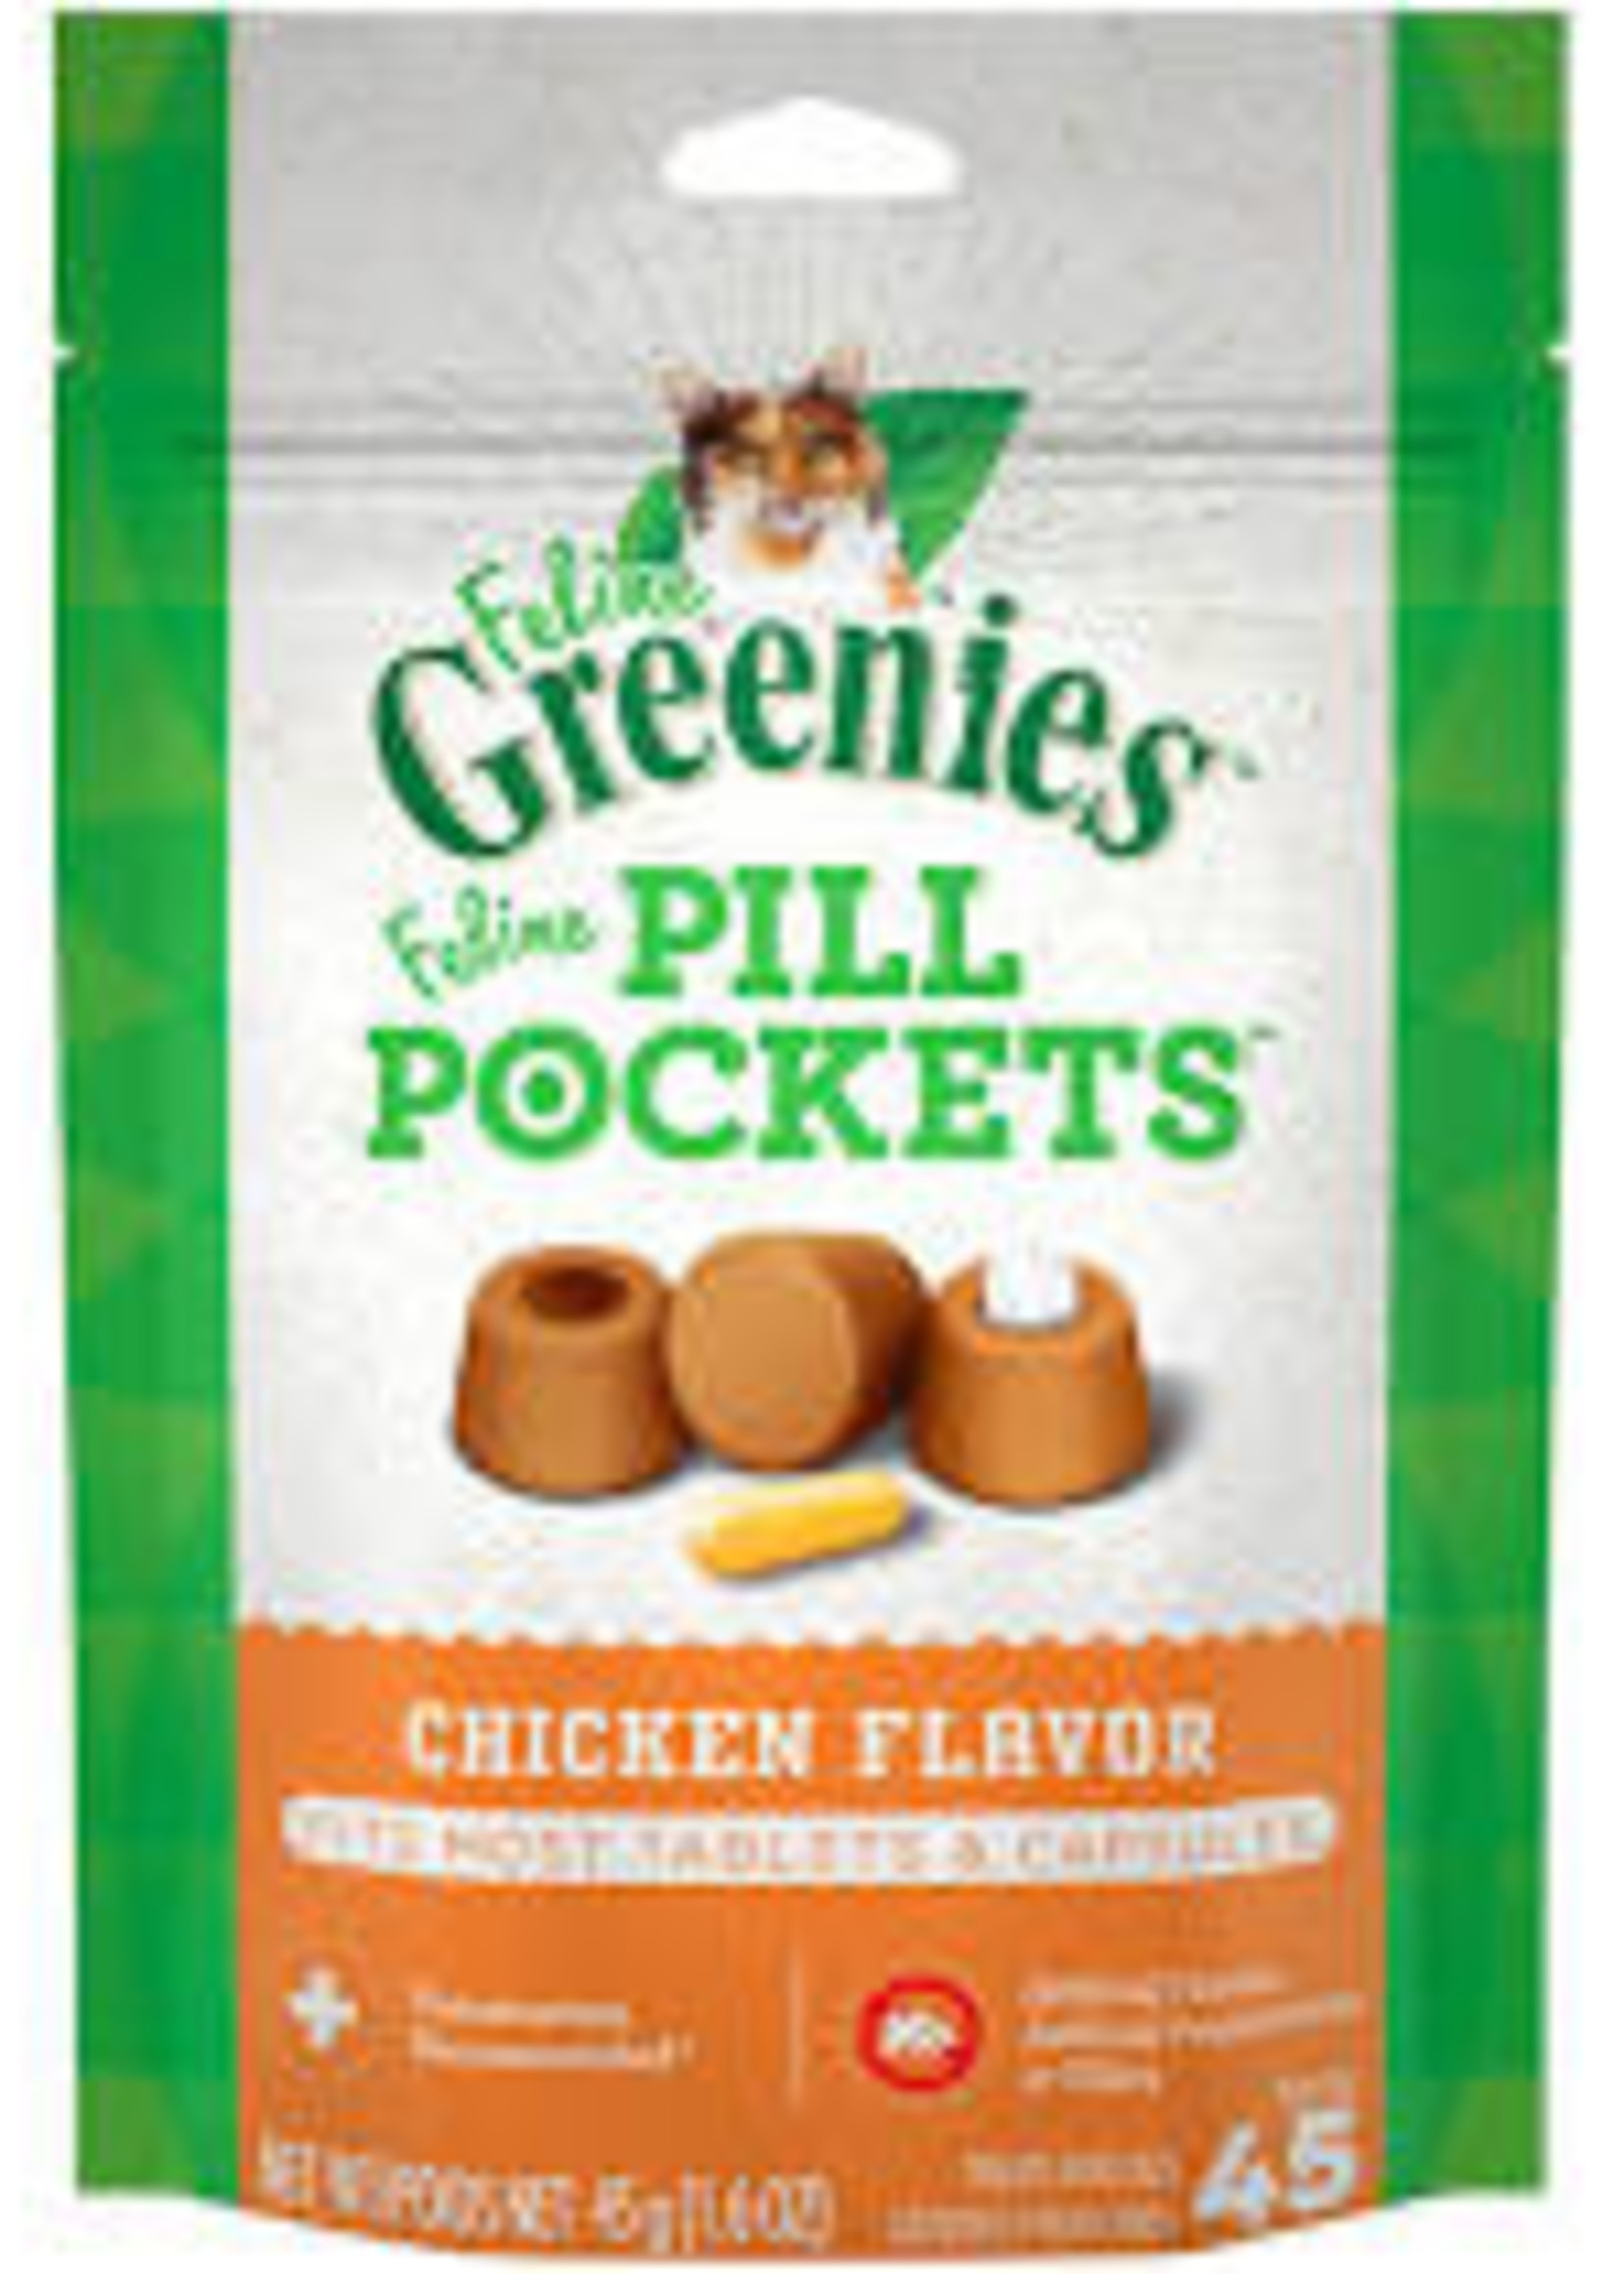 Greenies® Greenies Pill Pockets® Chicken Flavour 45g